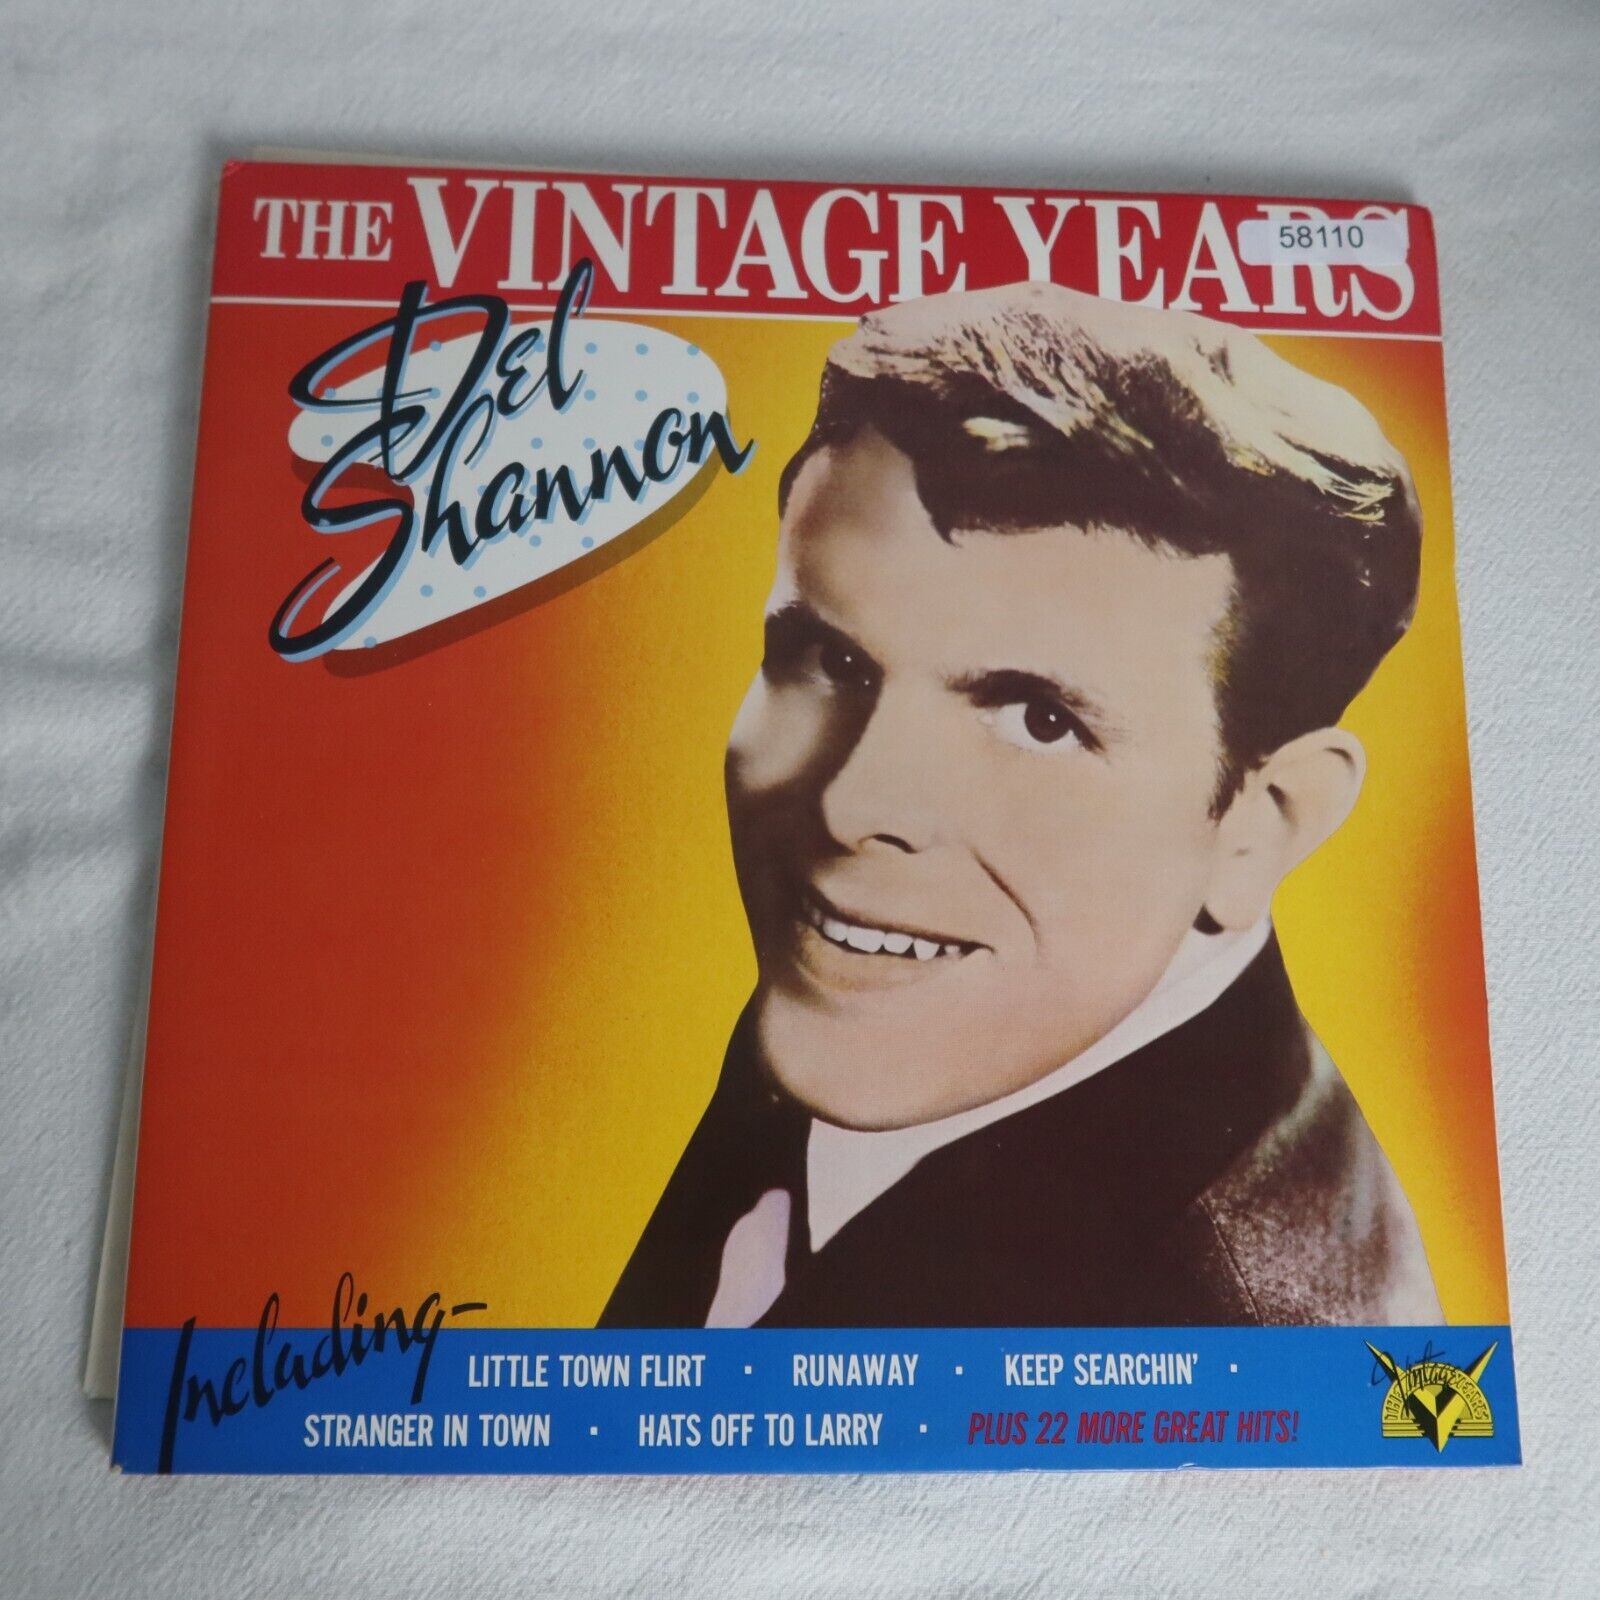 Del Shannon Vintage Years LP Vinyl Record Album